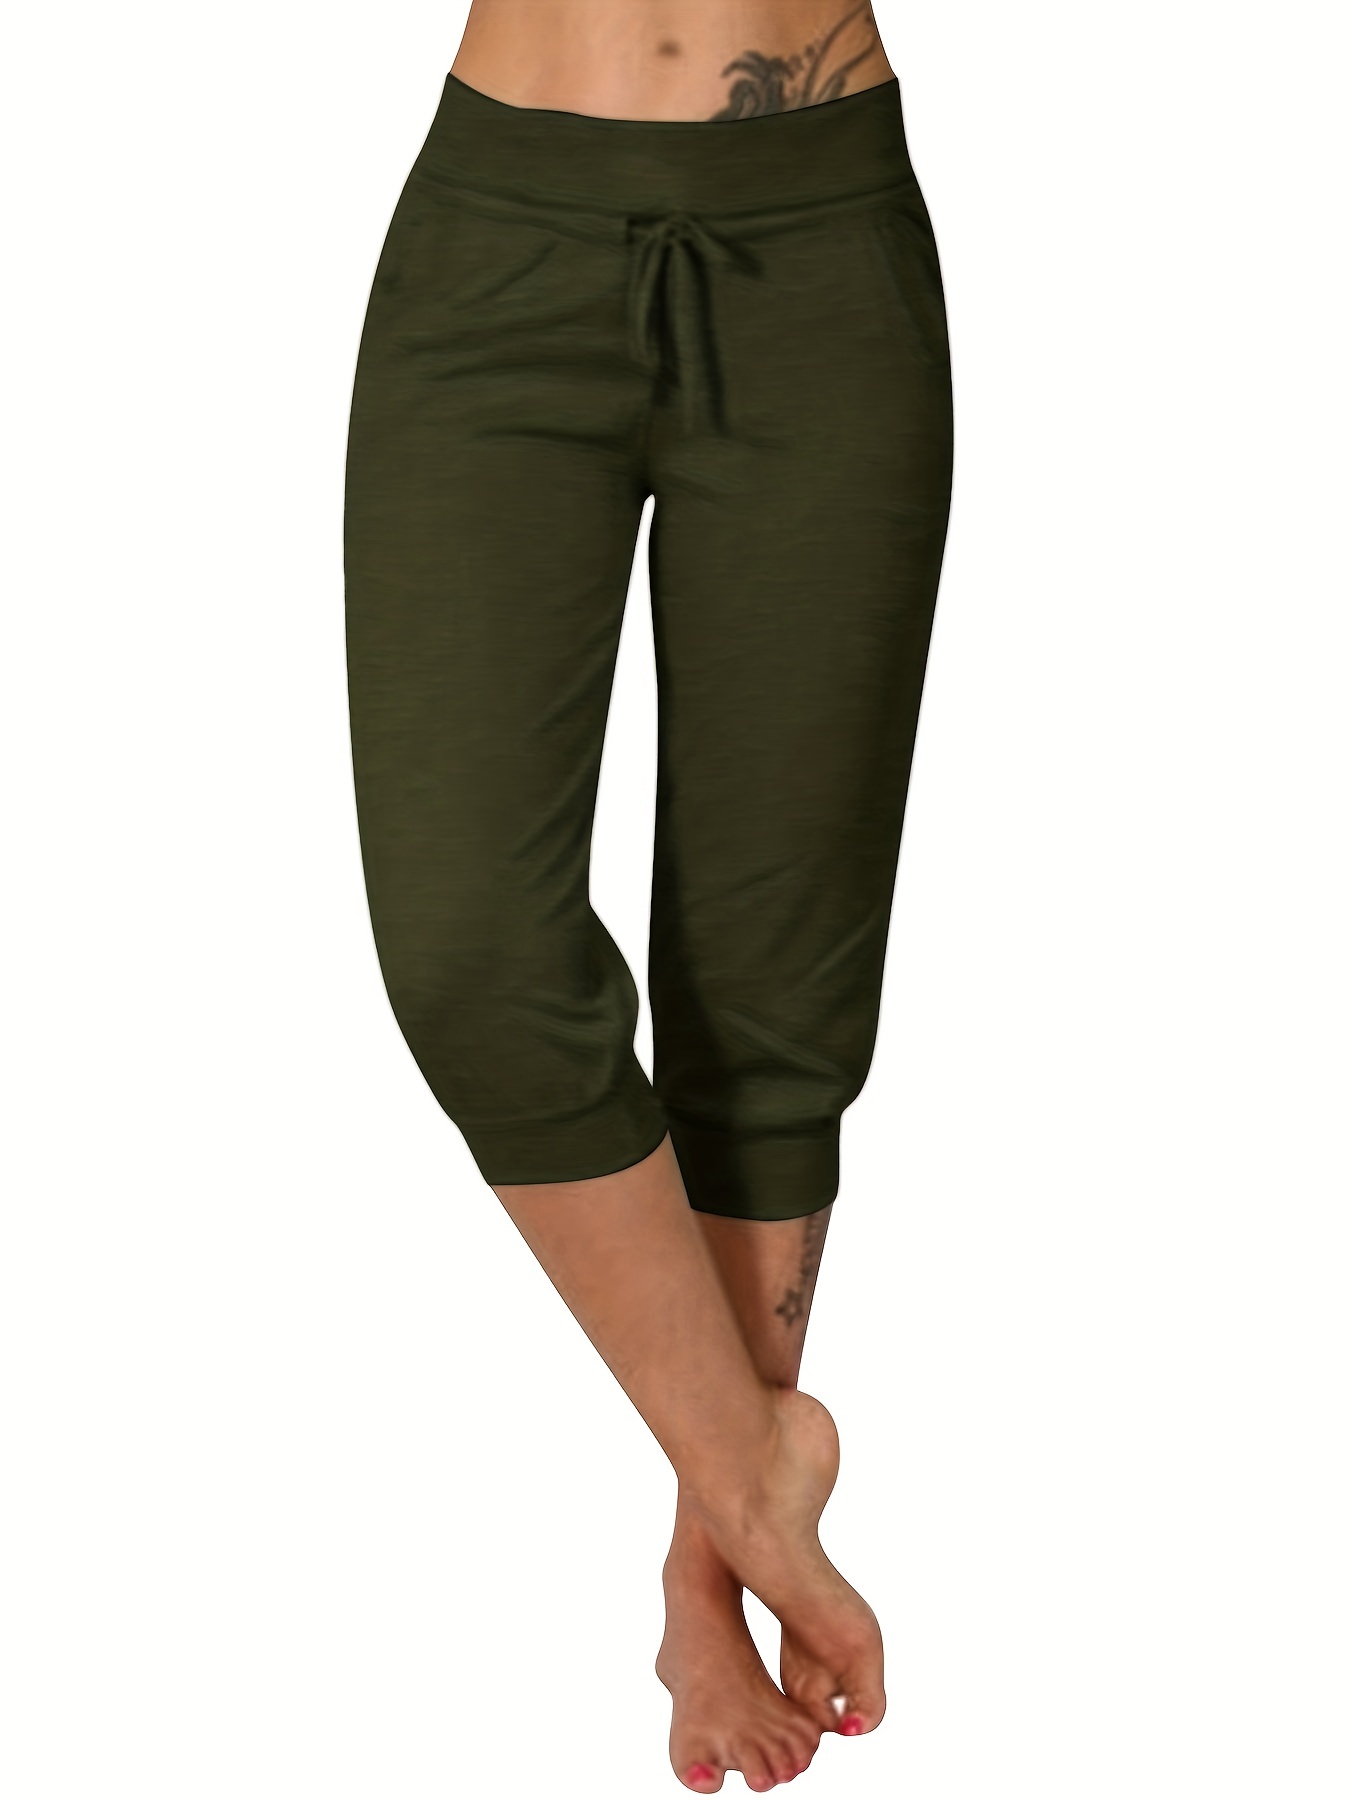 Capri Pants for Women Elegant Solid Color Dress Pants Skinny Fit